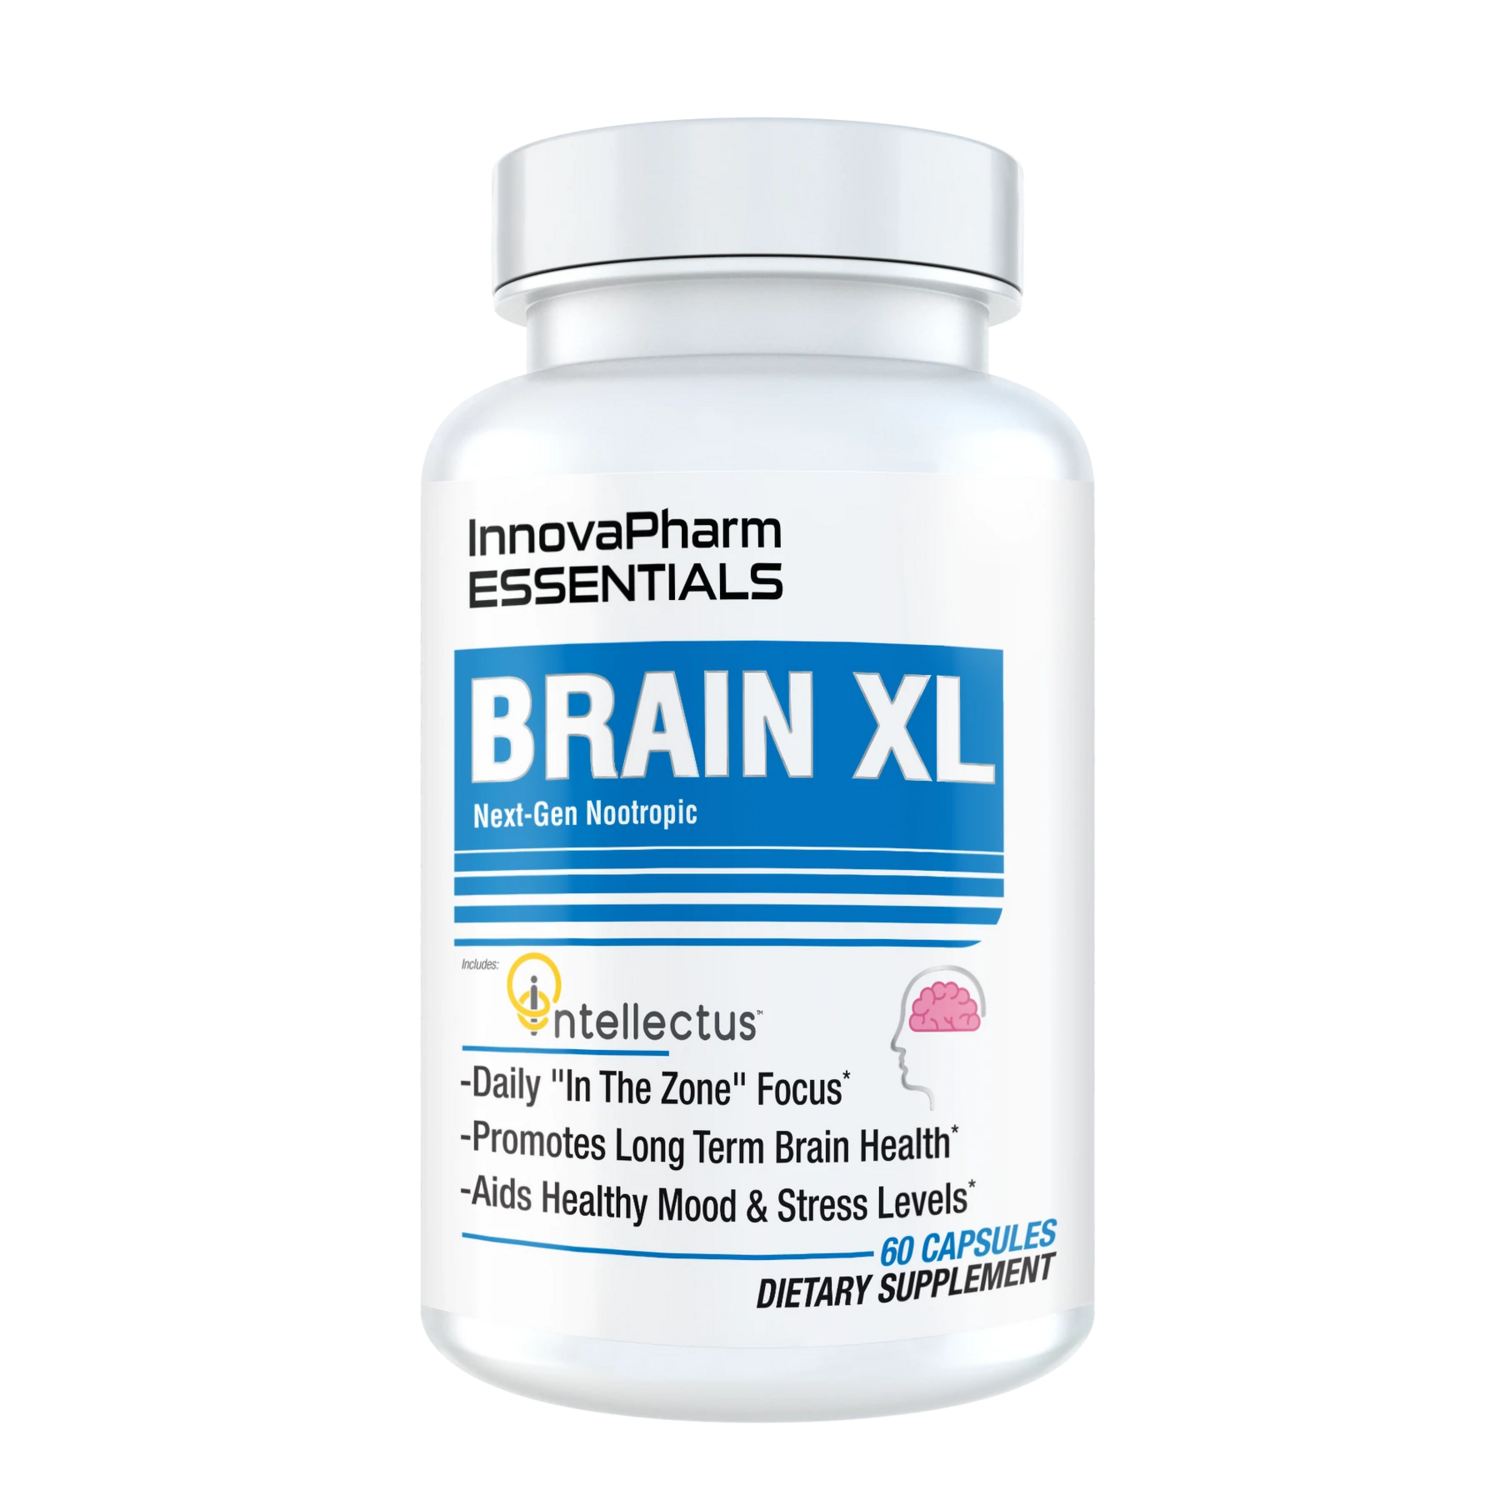 InnovaPharm Brain XL